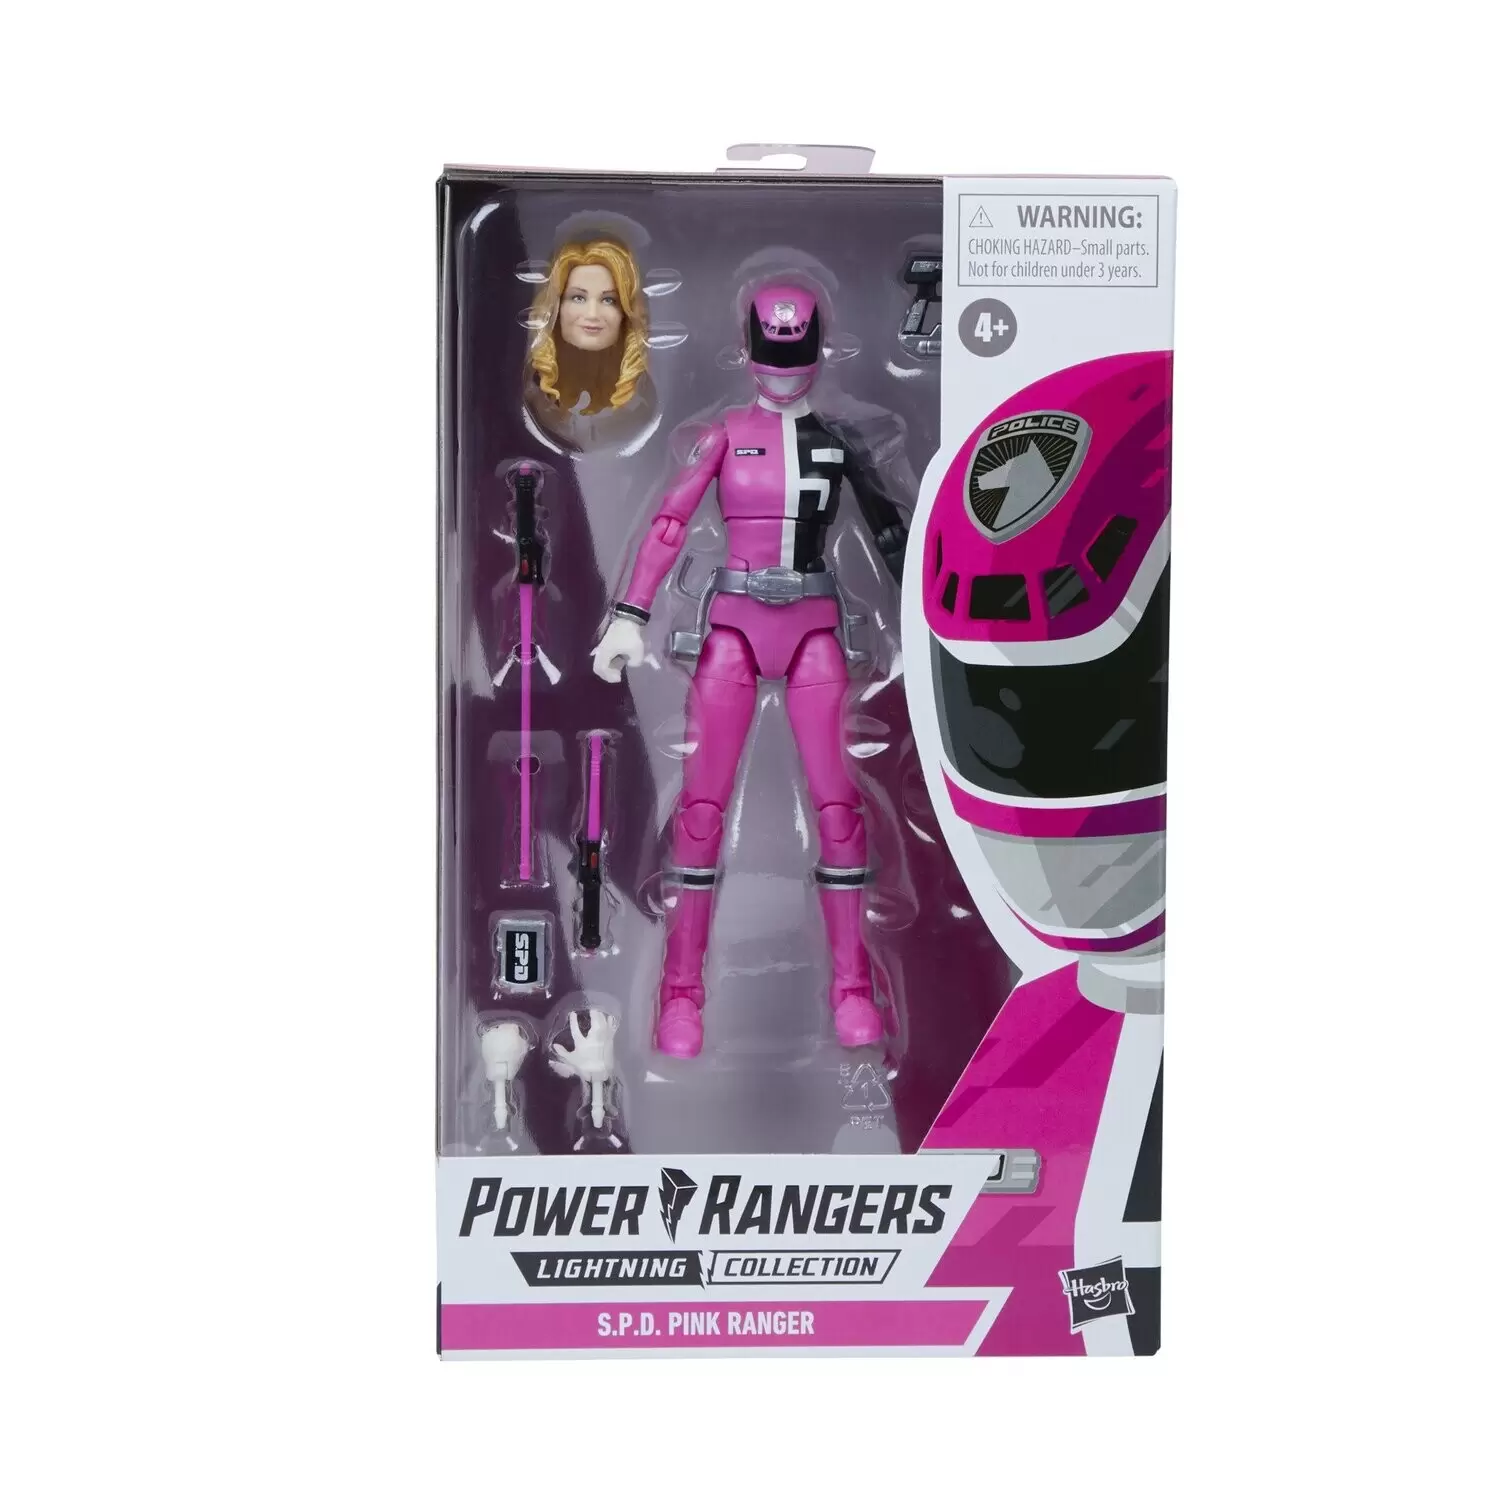 Power Rangers Hasbro - Lightning Collection - S.P.D. Pink Ranger Figure